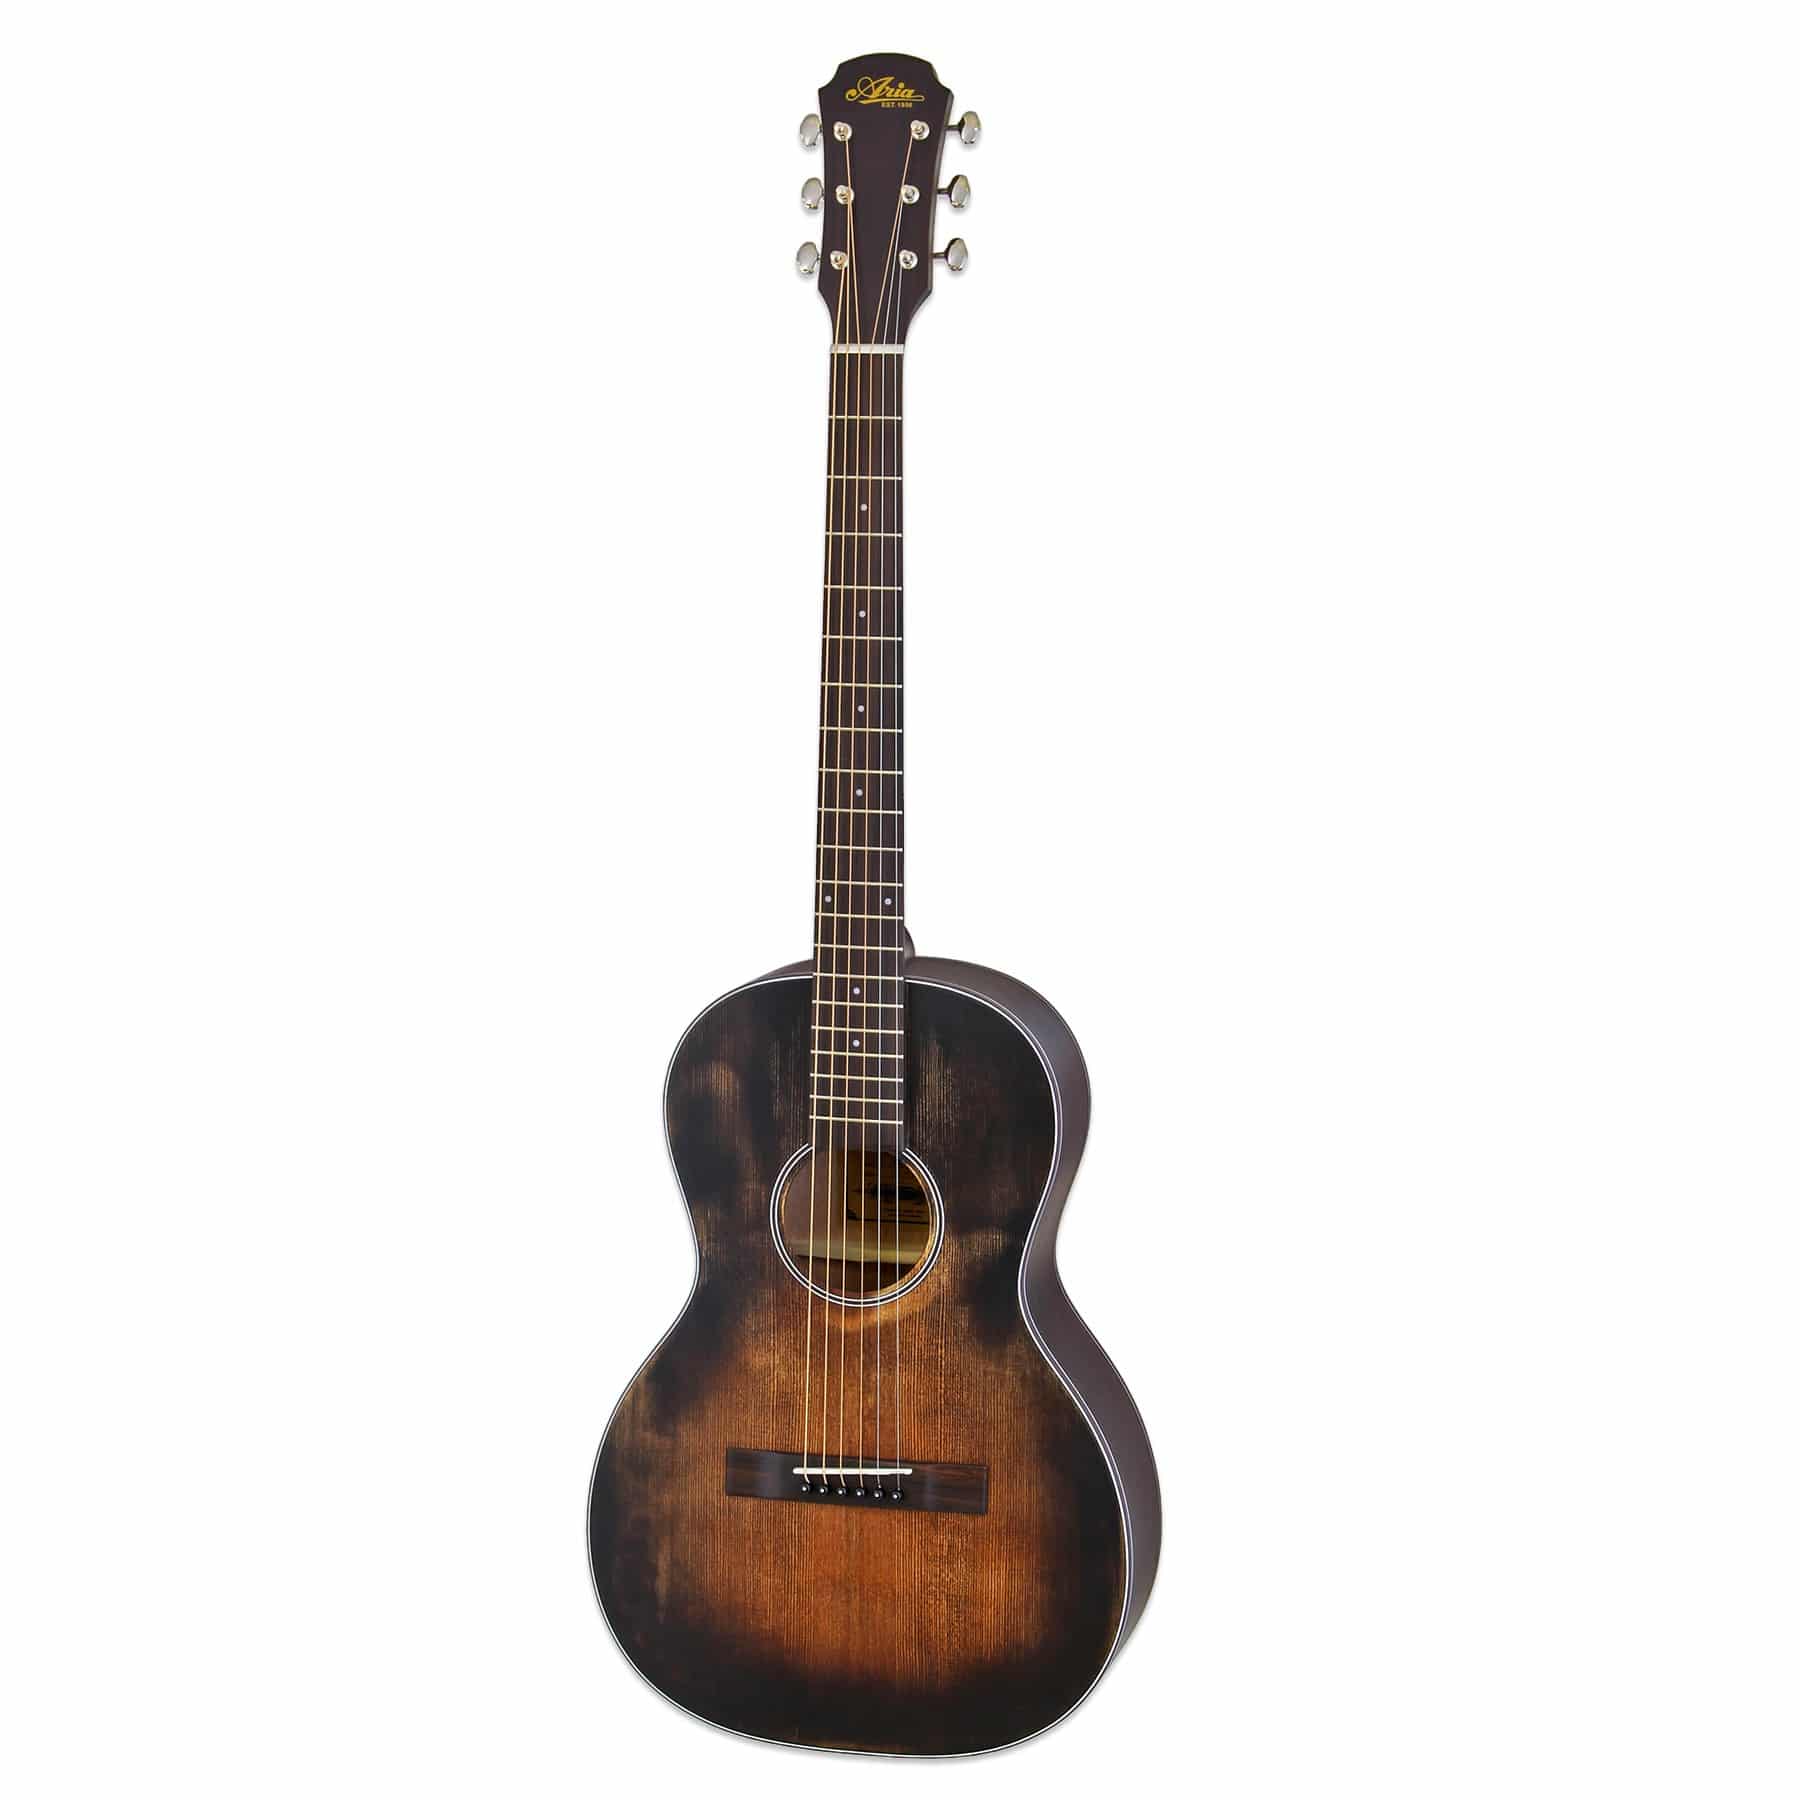 img src="/aria-western-guitar" alt="Aria 131DP Acoustic Delta Player Western Guitar "